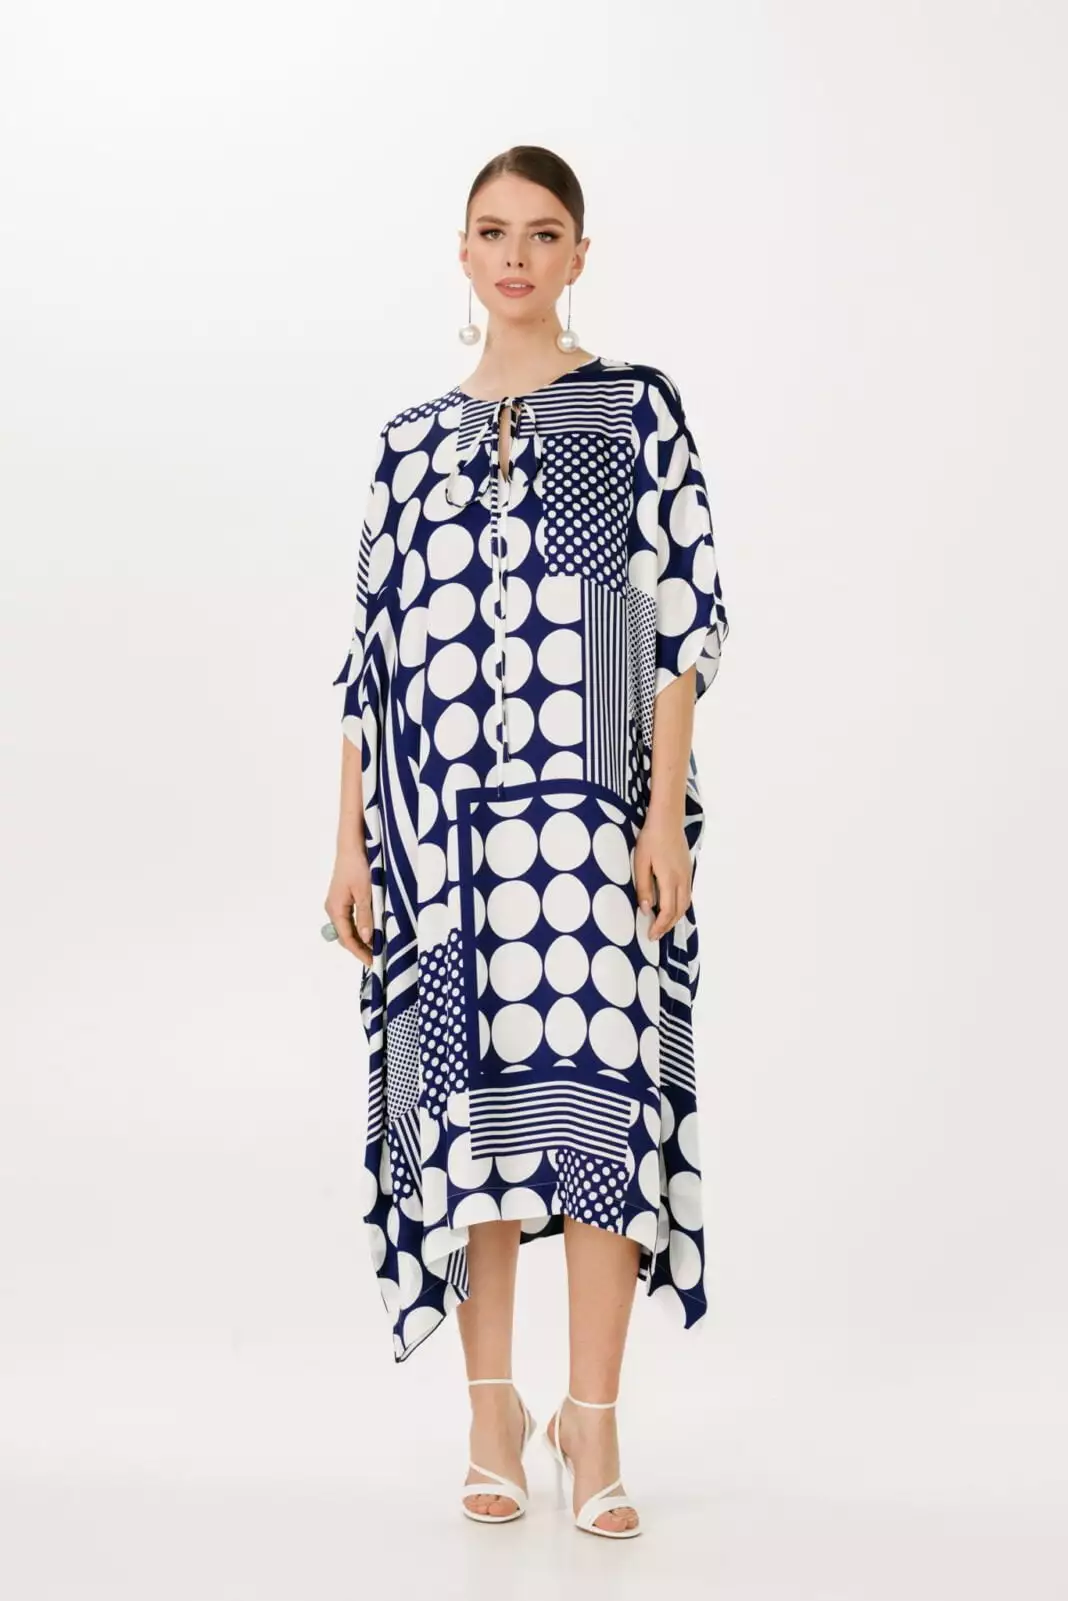 Blue and white geometric pattern maxi caftan dress by House of Azoiia